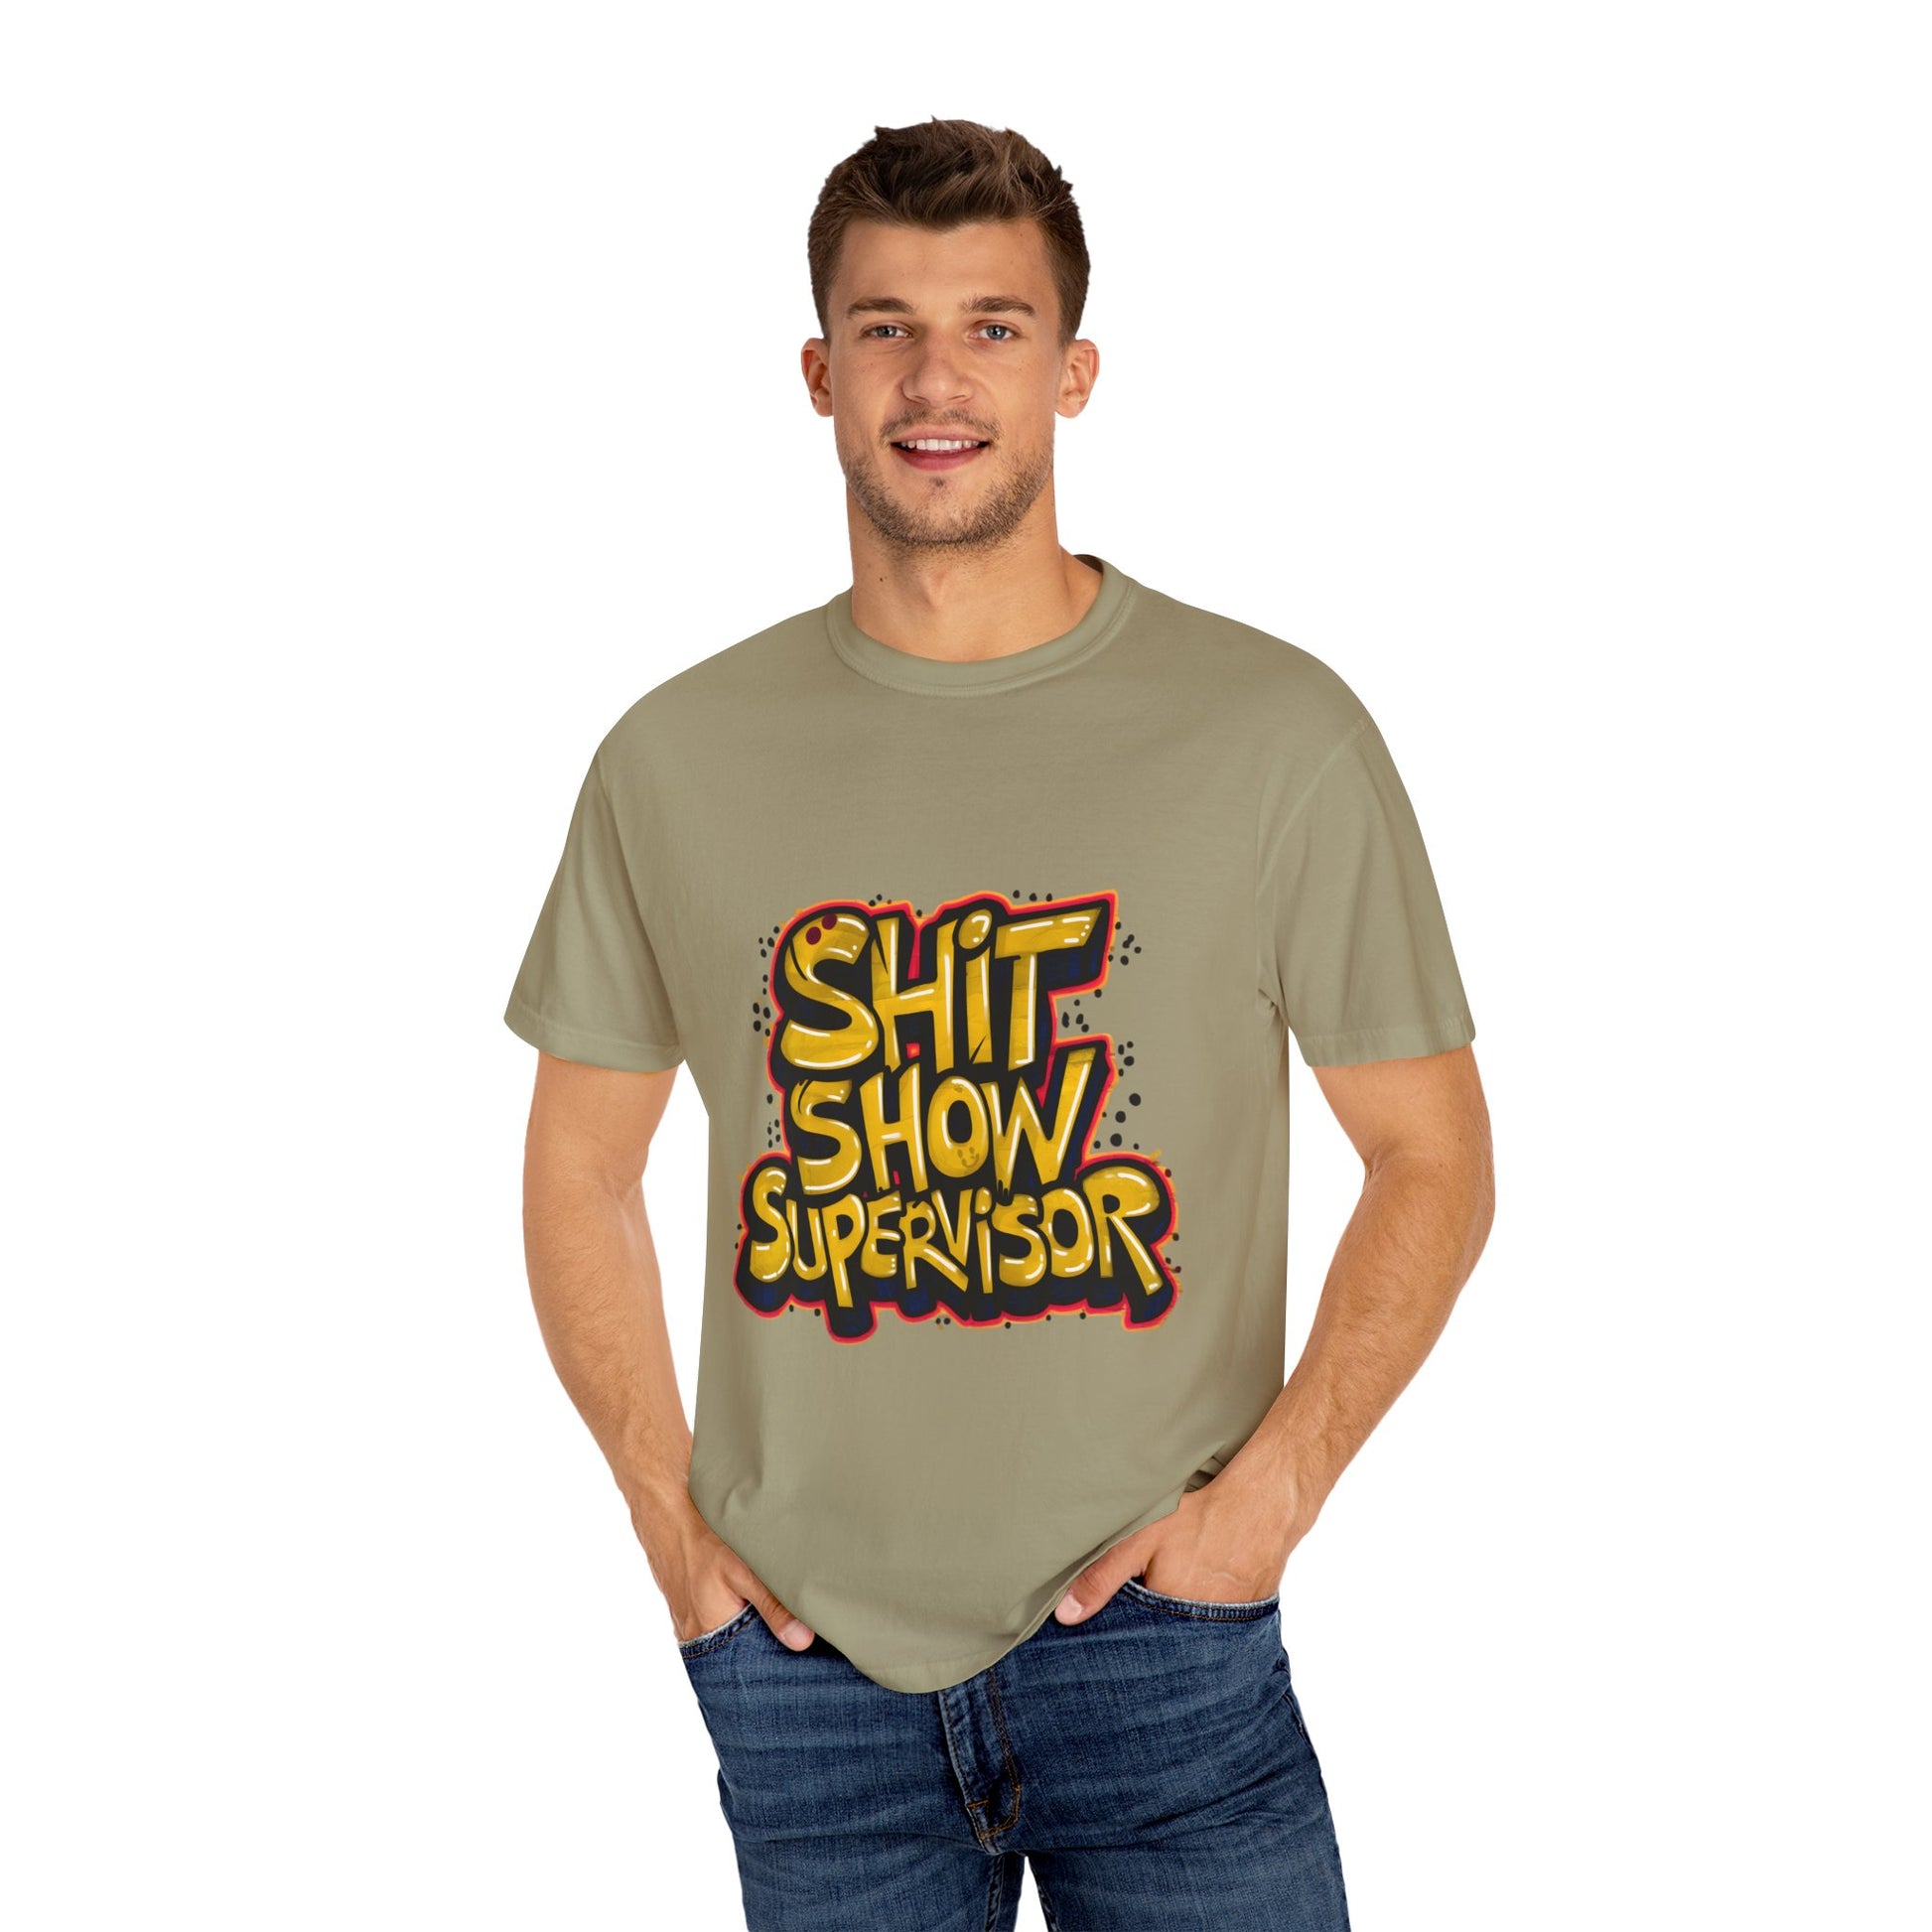 Shit Show Supervisor Urban Sarcastic Graphic Unisex Garment Dyed T-shirt Cotton Funny Humorous Graphic Soft Premium Unisex Men Women Khaki T-shirt Birthday Gift-48